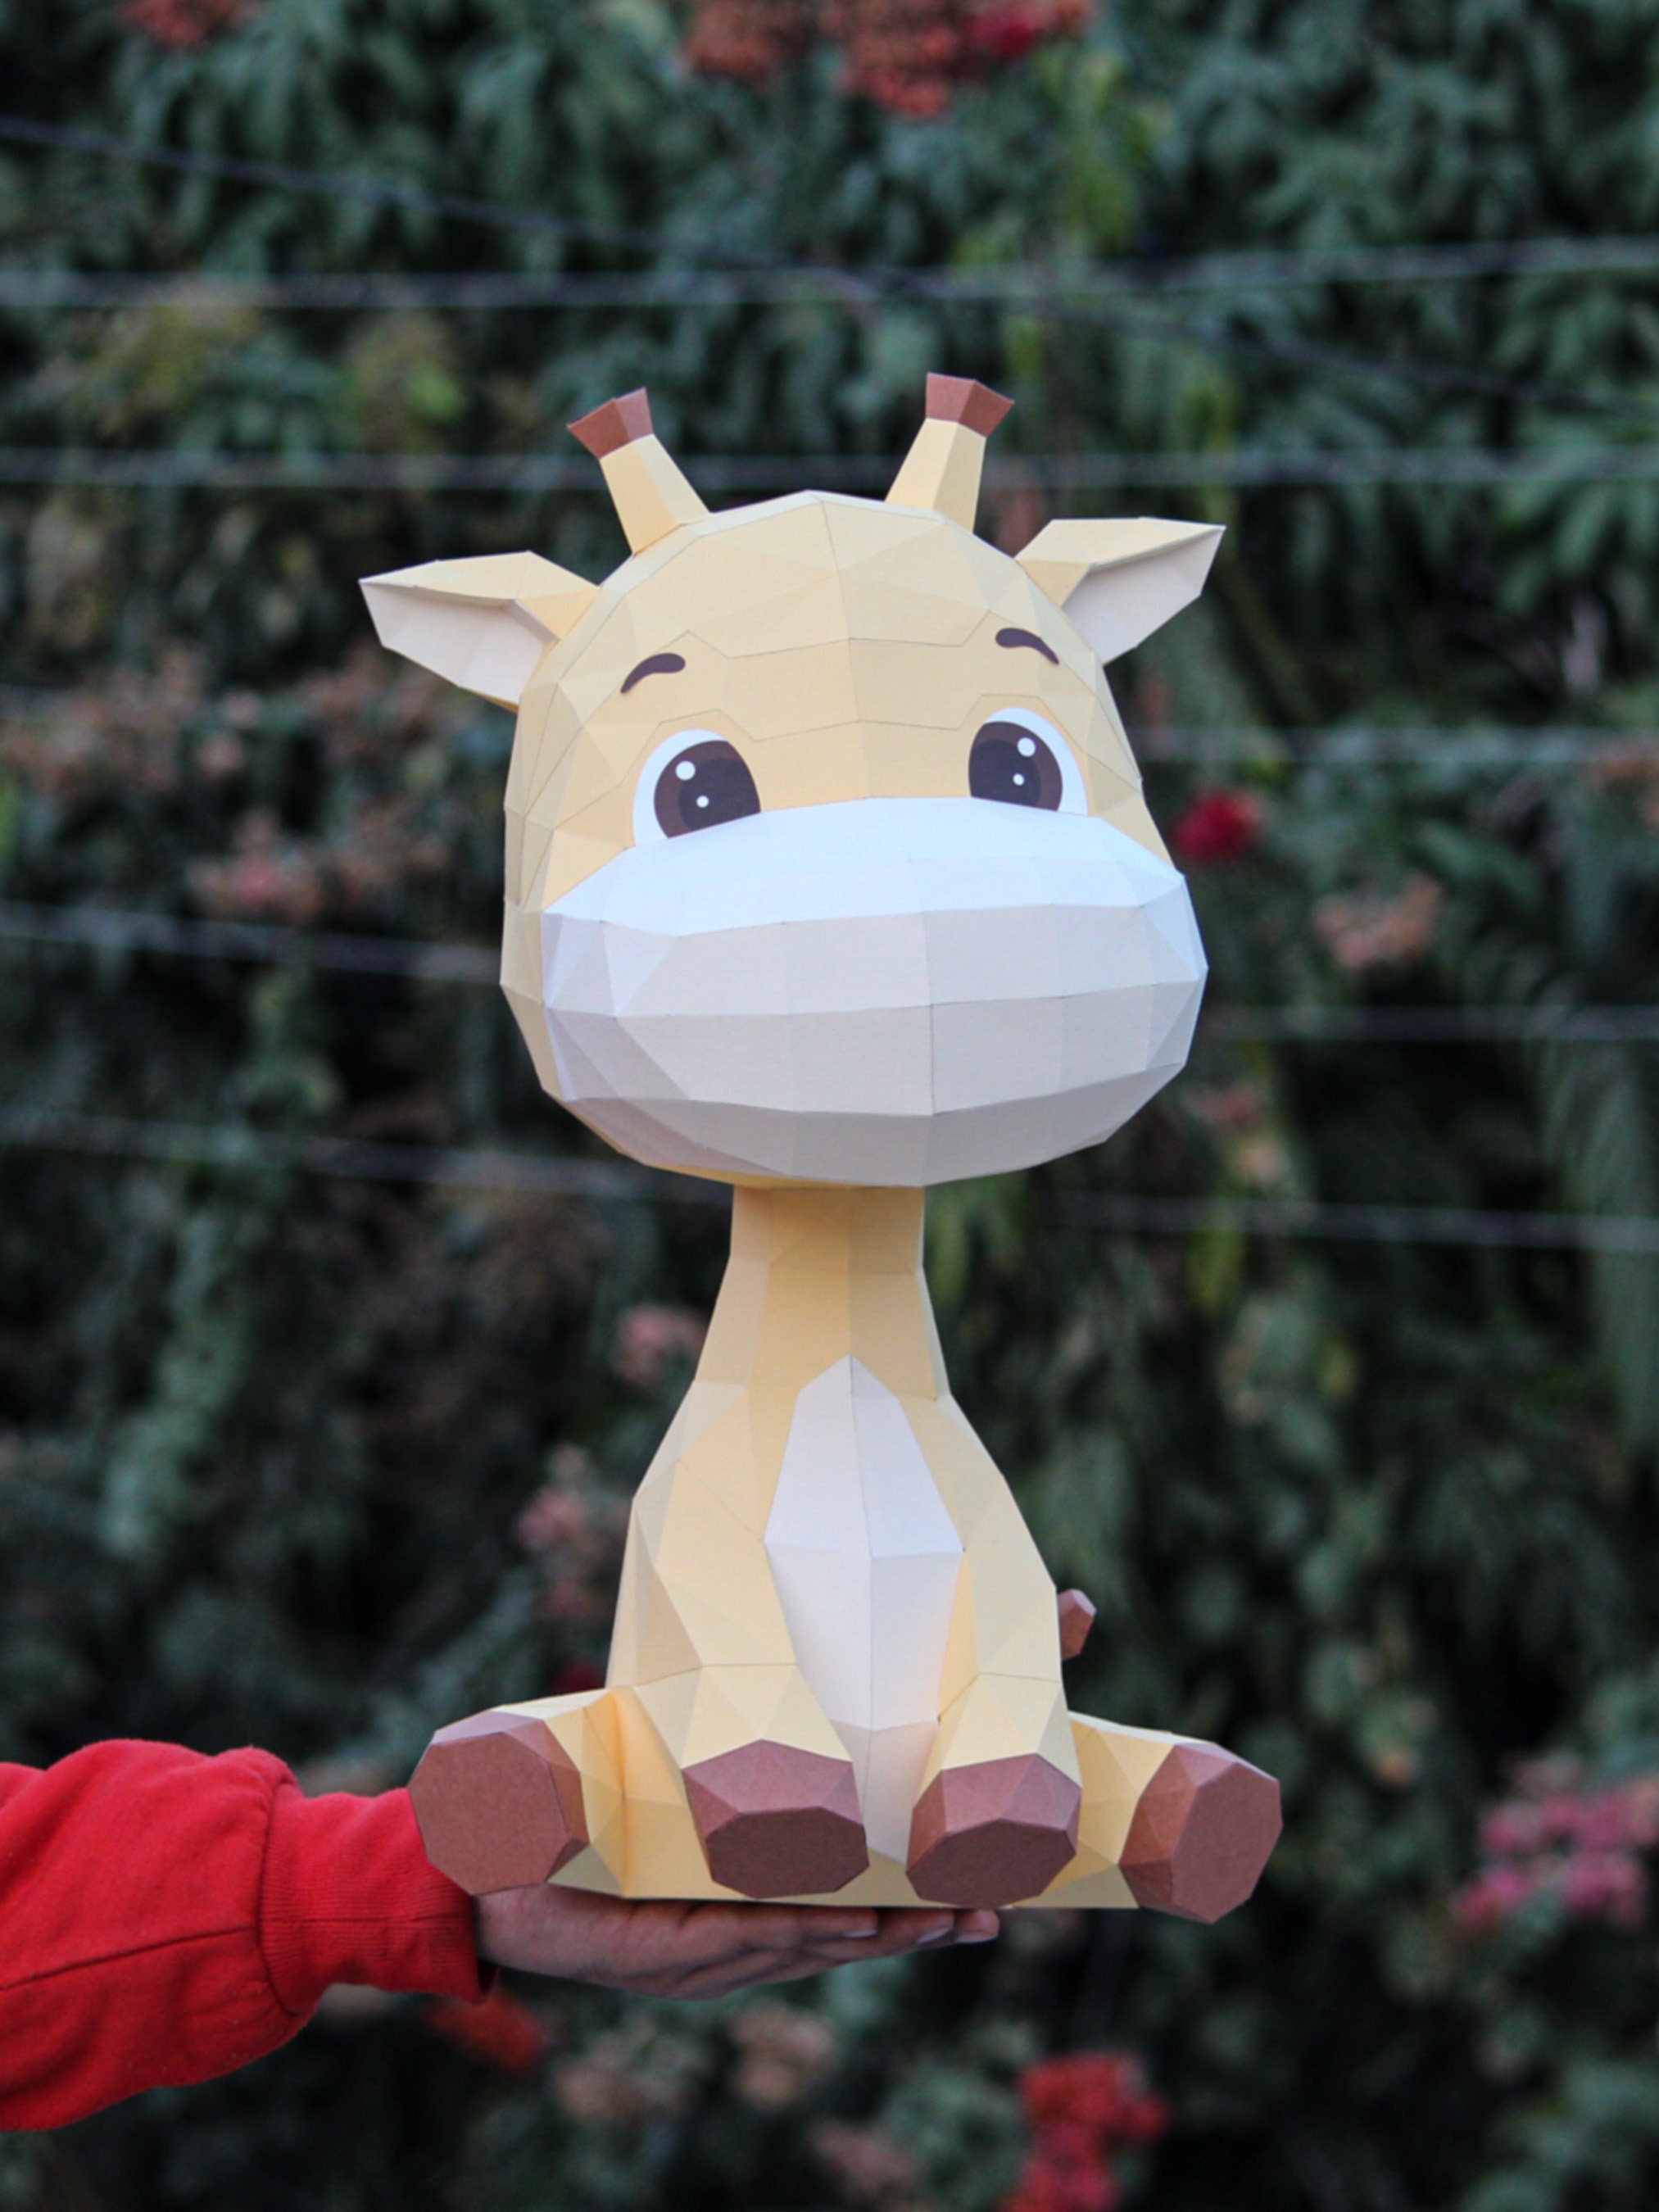 Low poly papercraft giraffe 3d giraffe papercraft DIY origami | Etsy